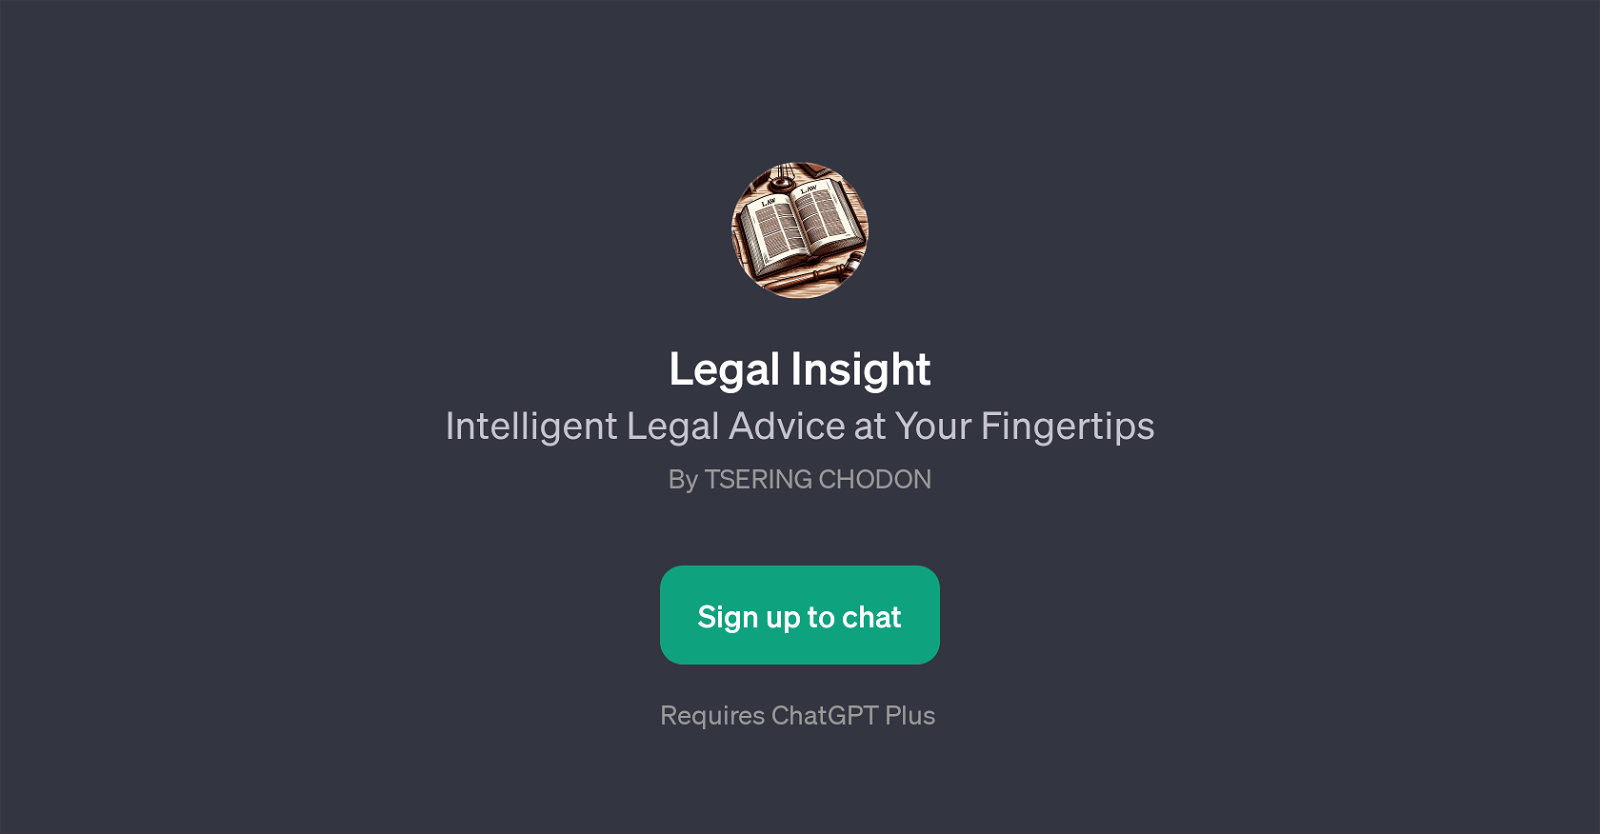 Legal Insight website